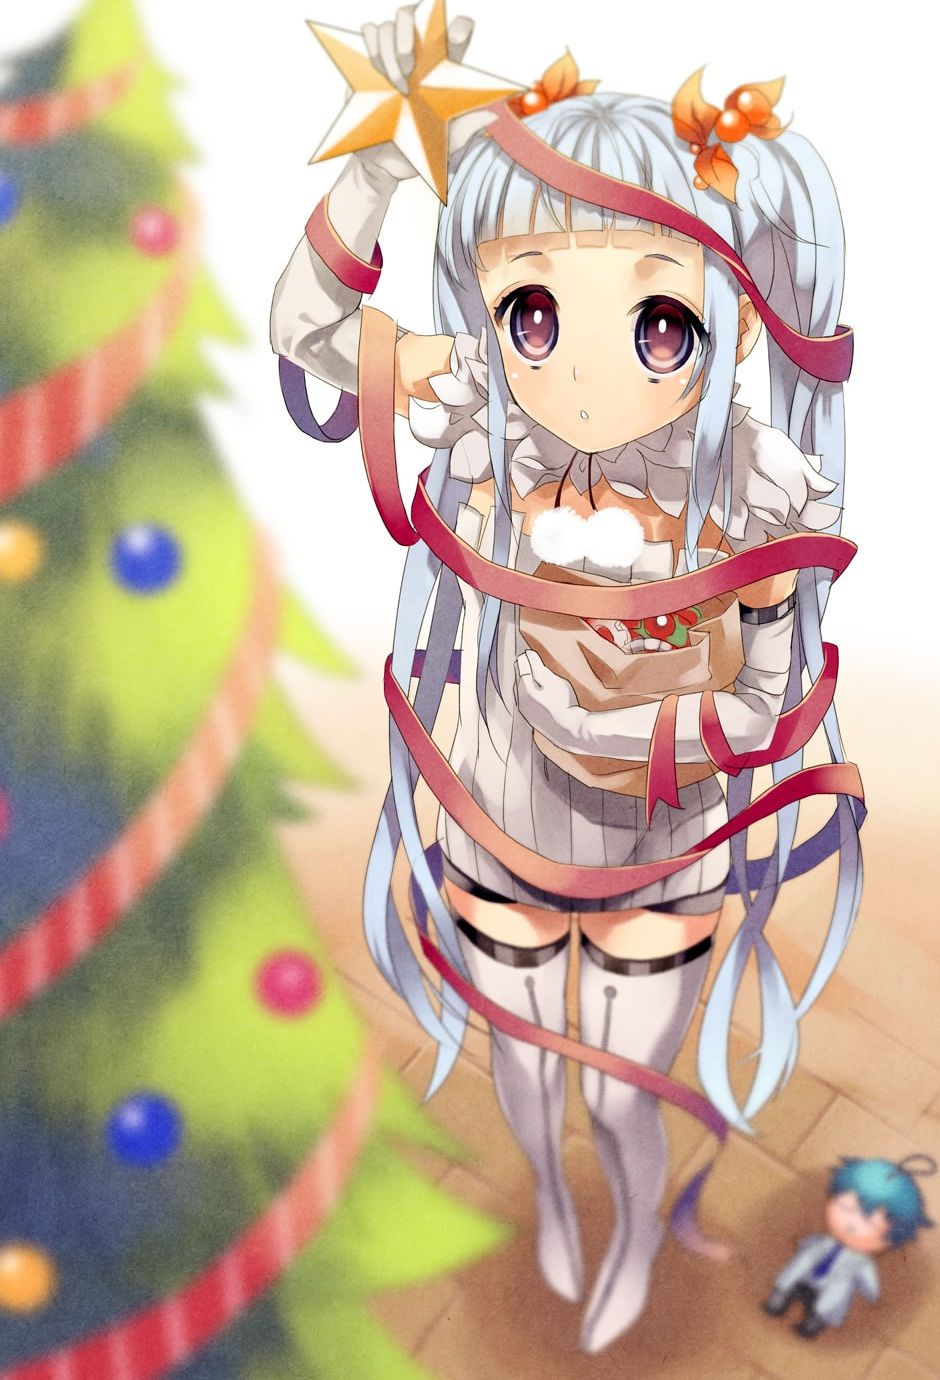 Phi Stars: Cute Anime Girls Xmas or Christmas Wallpaper